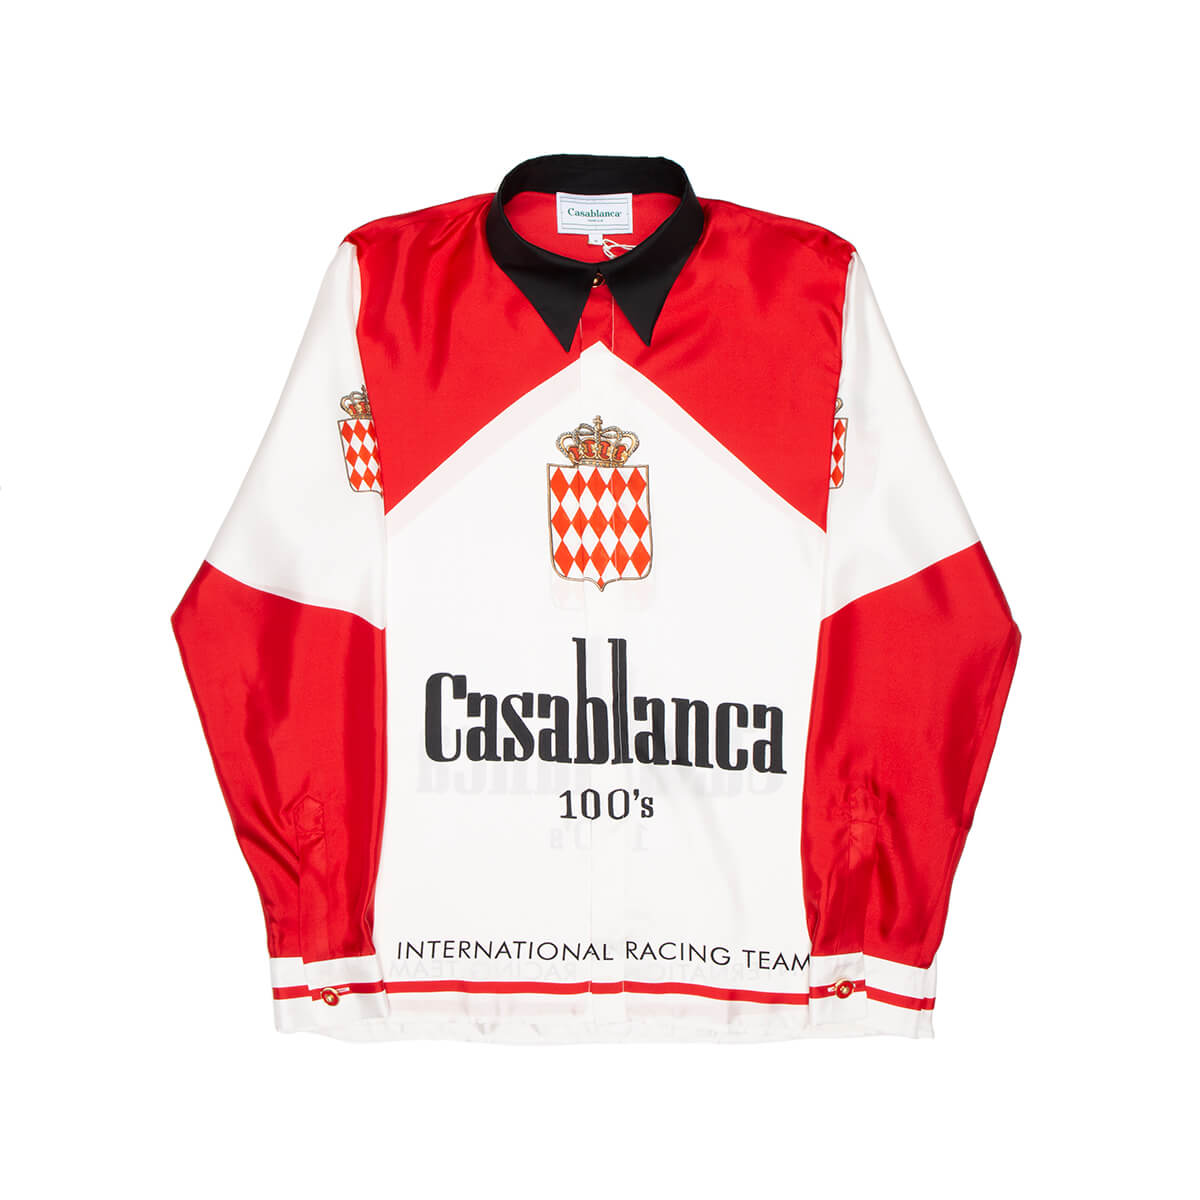 Casablanca 100s Shirt